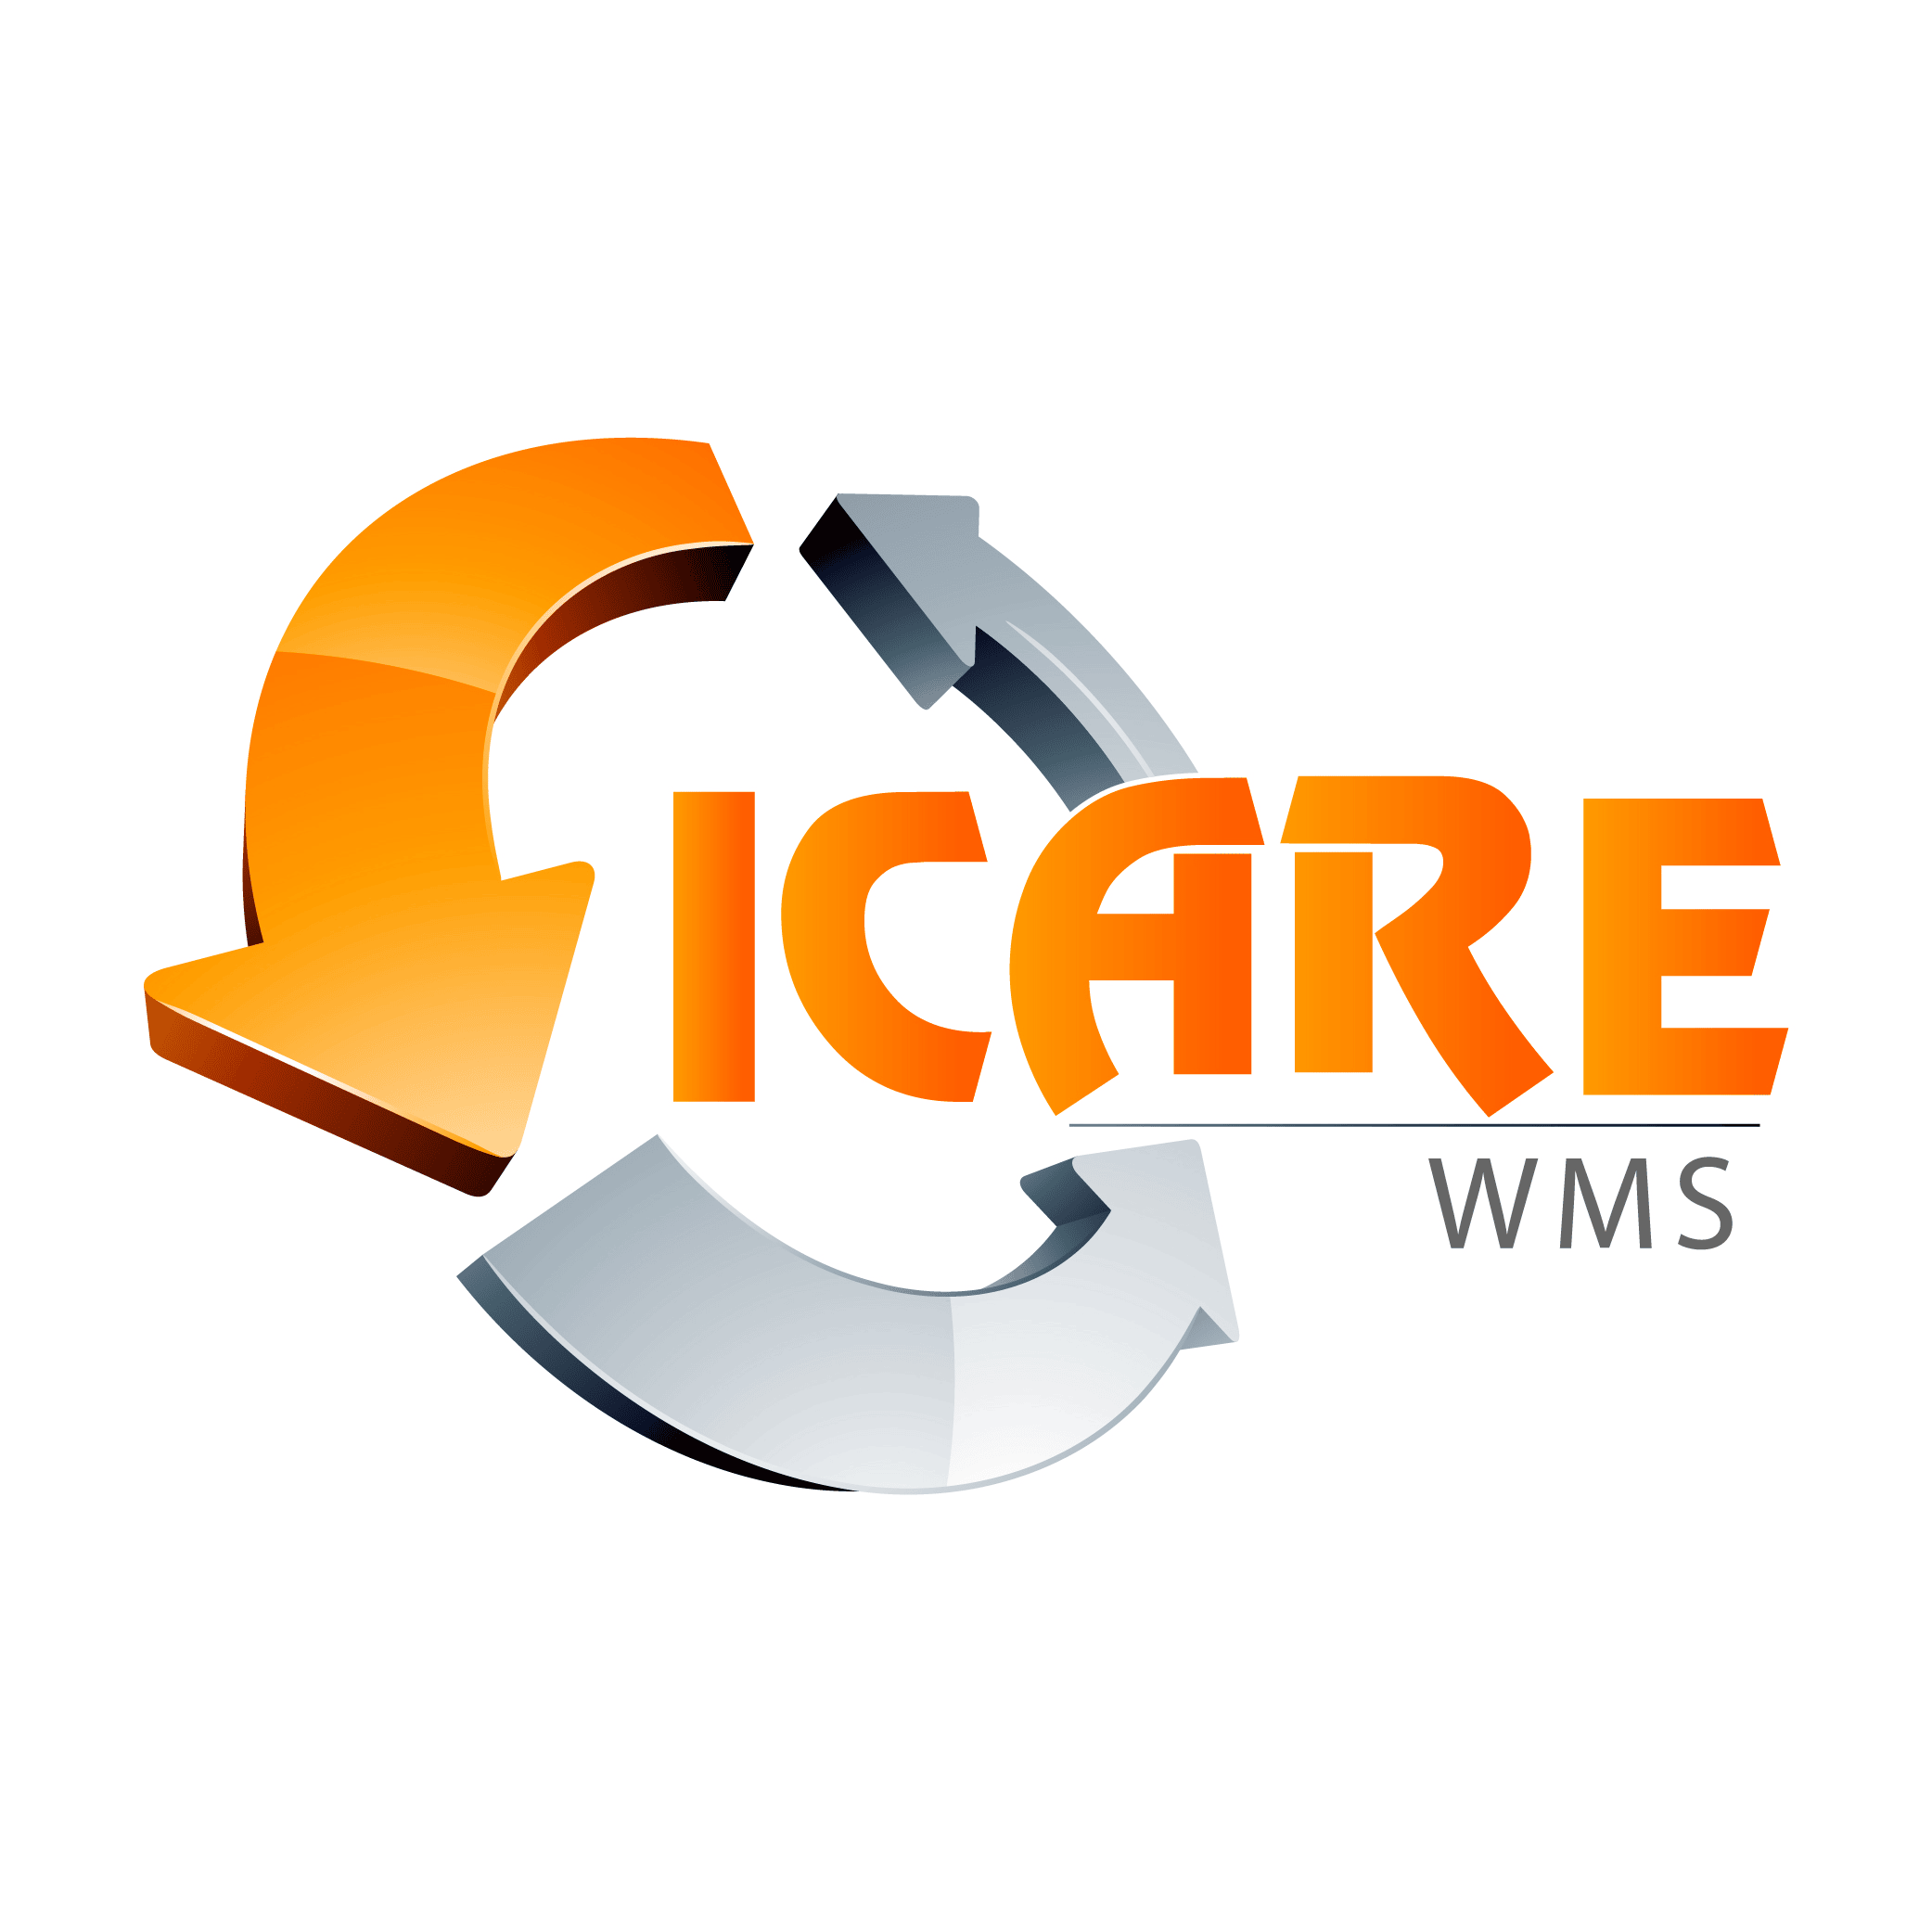 Logo Icare